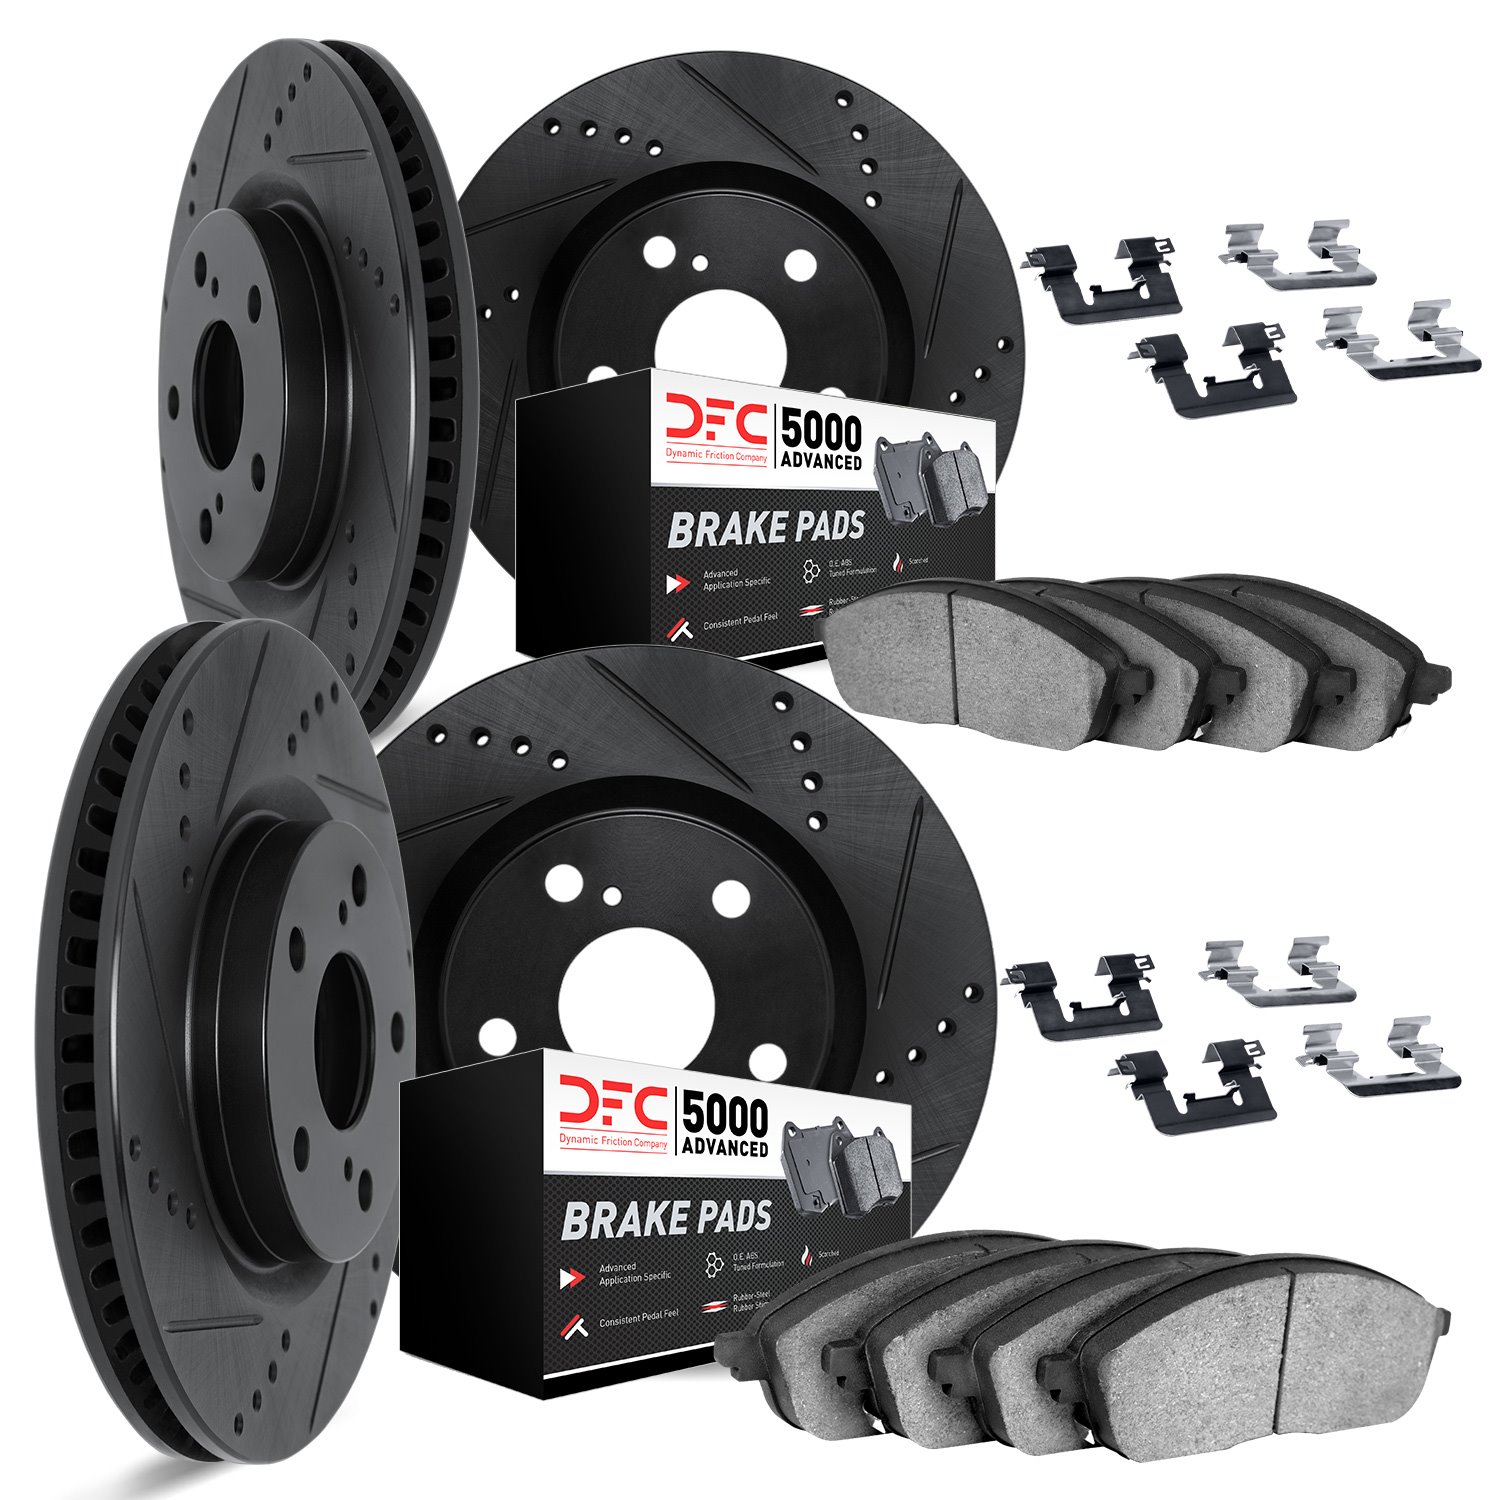 8514-40266 Drilled/Slotted Brake Rotors w/5000 Advanced Brake Pads Kit & Hardware [Black], 2004-2004 Mopar, Position: Front and